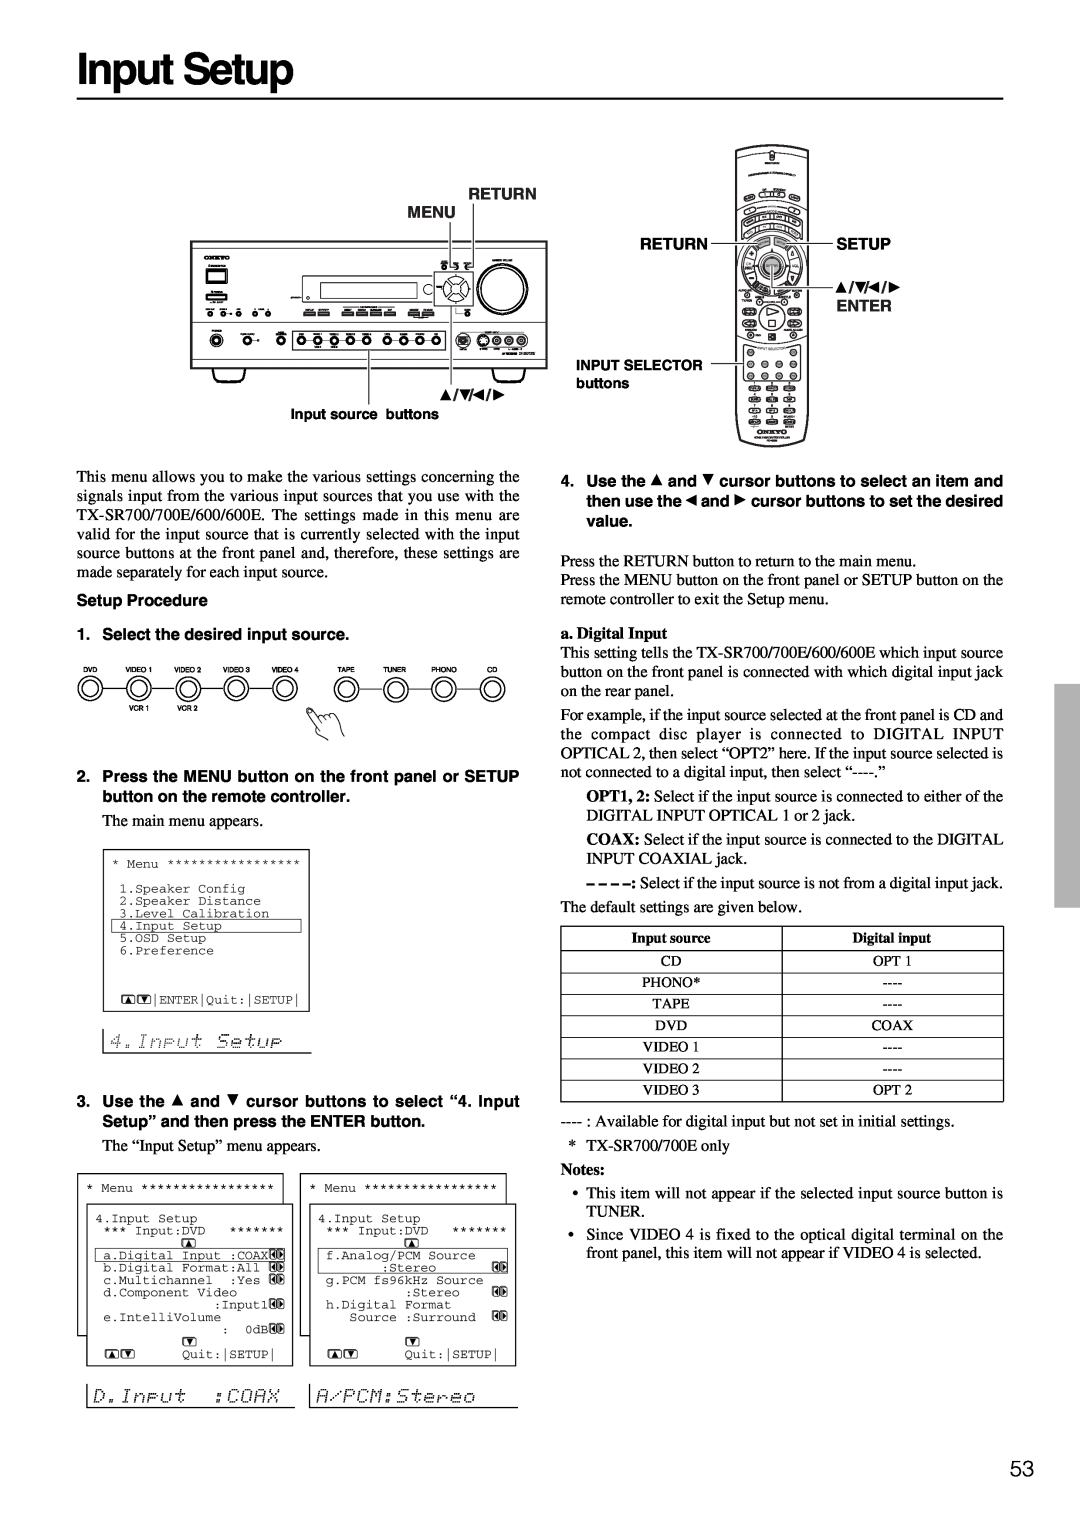 Onkyo TX-SR600/600E, TX-SR700/700E instruction manual Input Setup, a. Digital Input, Notes 